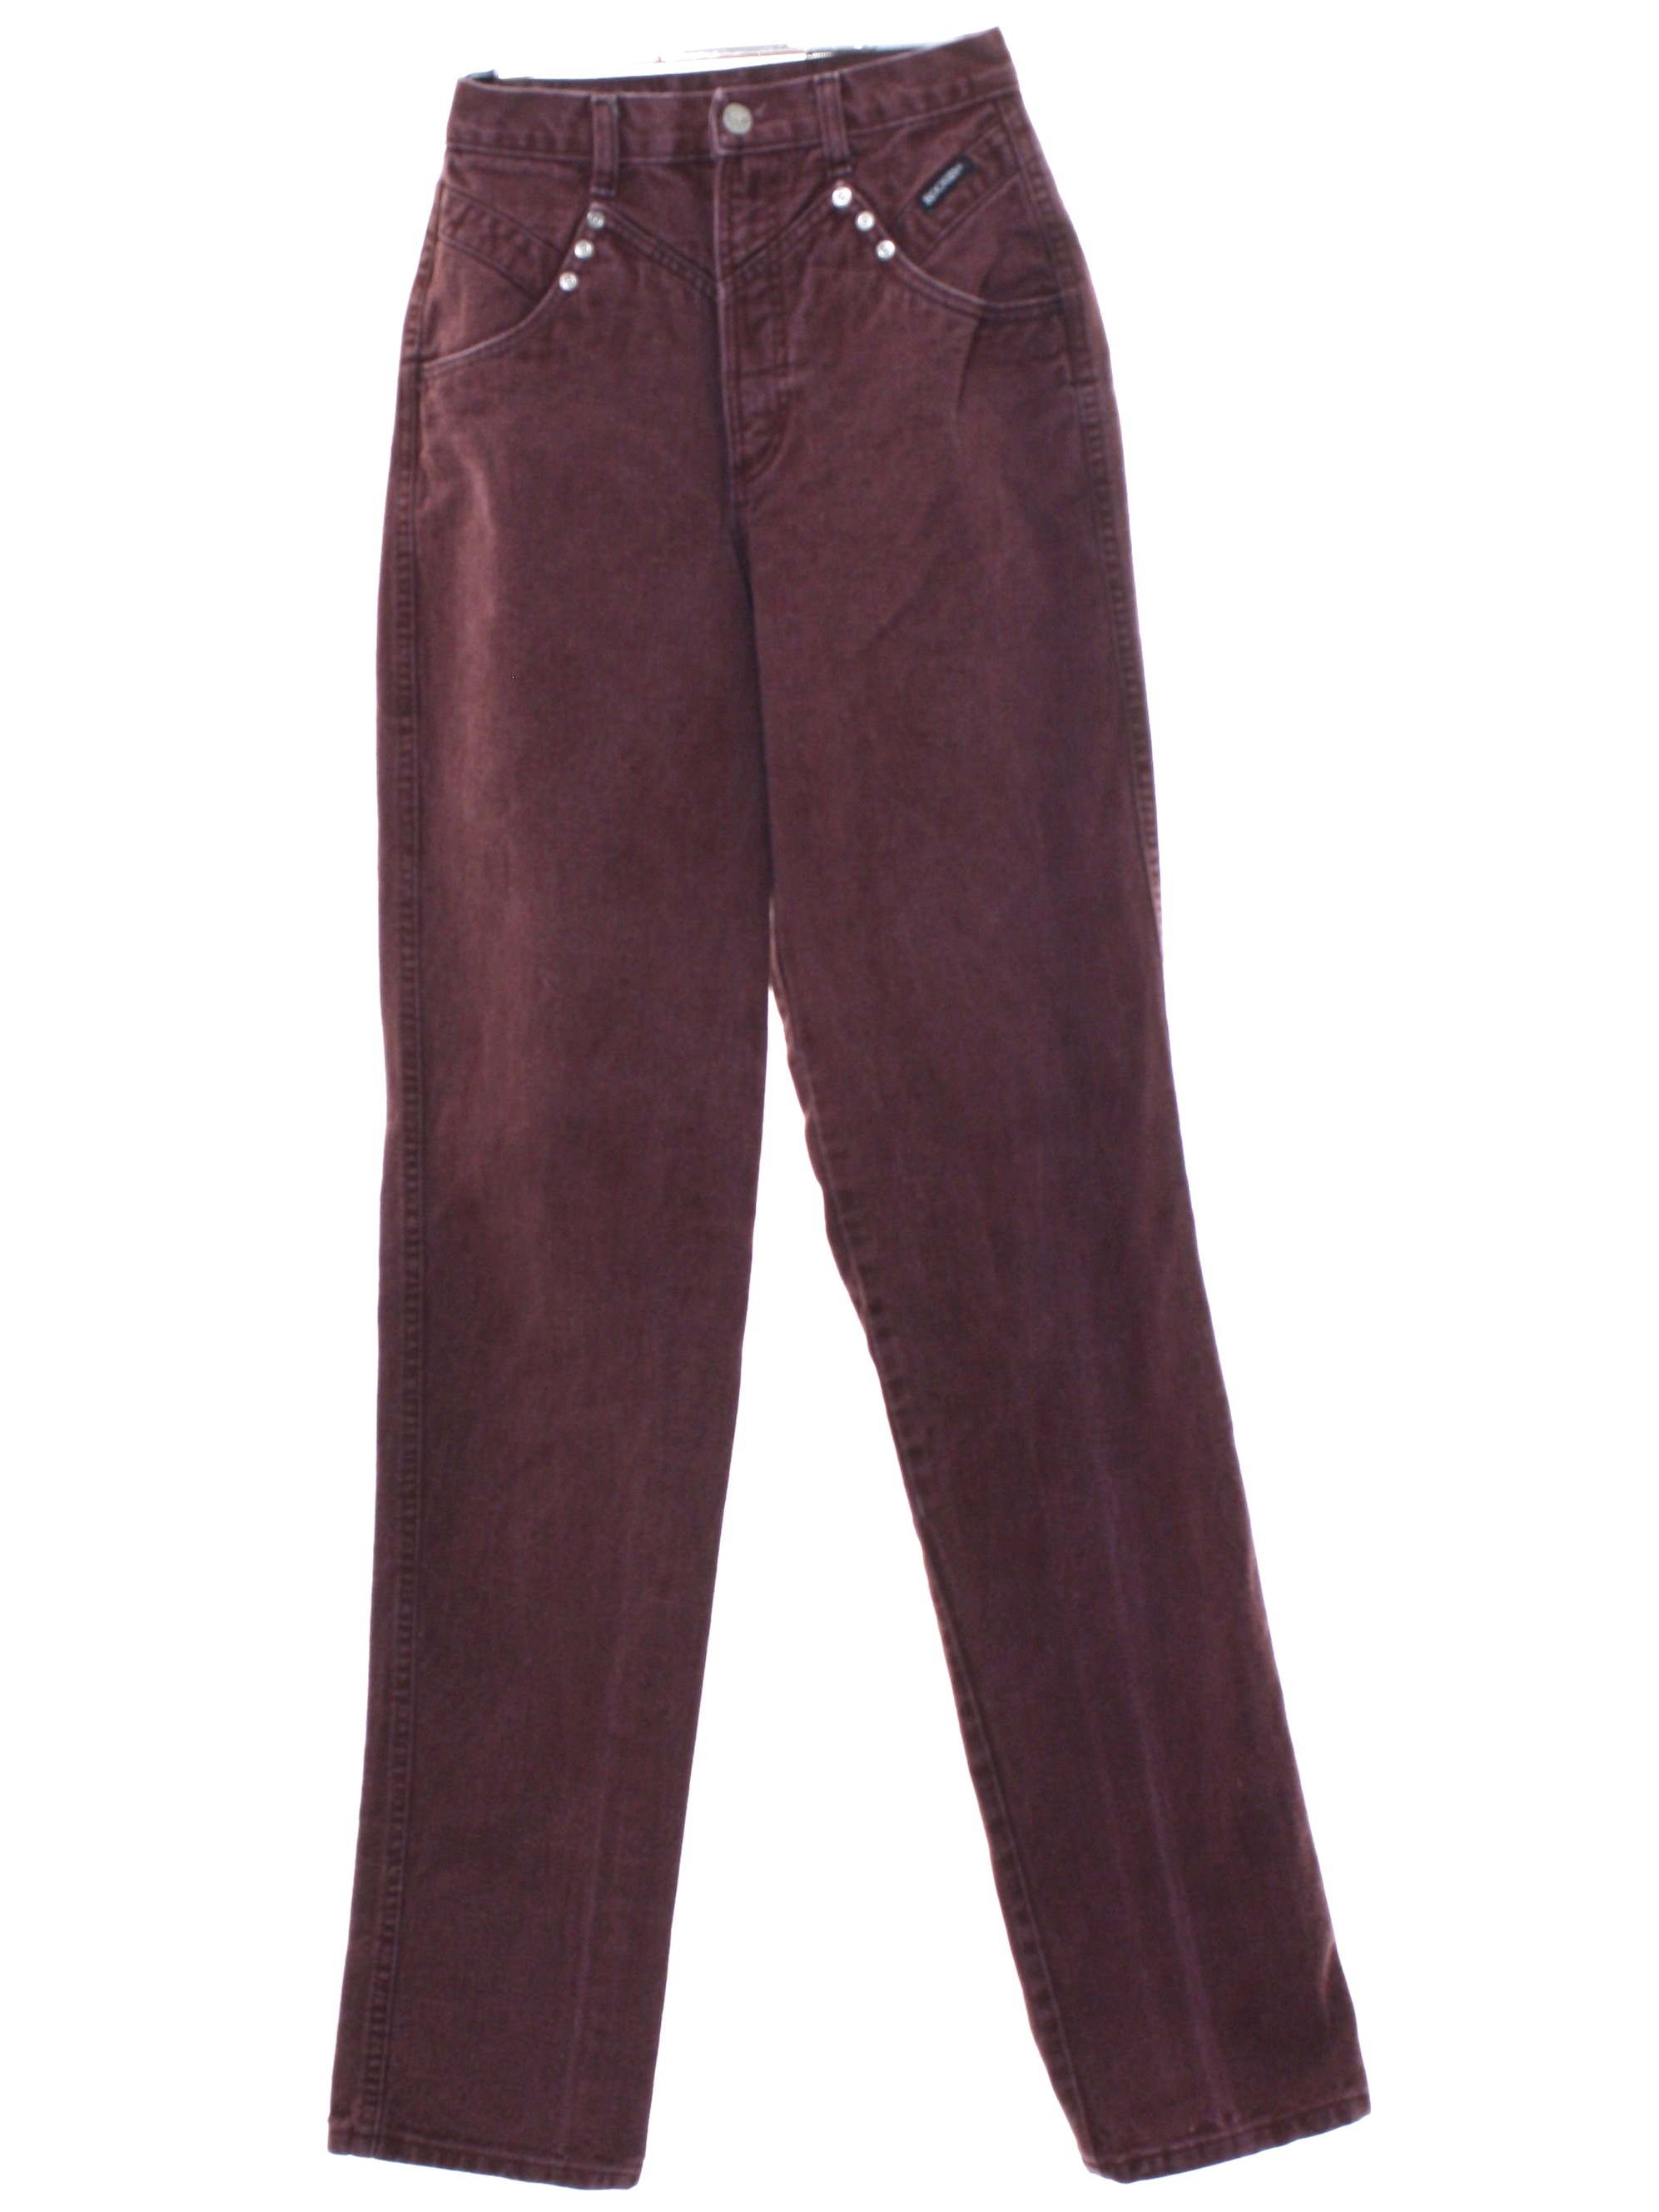 Rockies Jeans Womens 13/14 Inseam 36in High Rise Bareback Denim Pants  Vintage